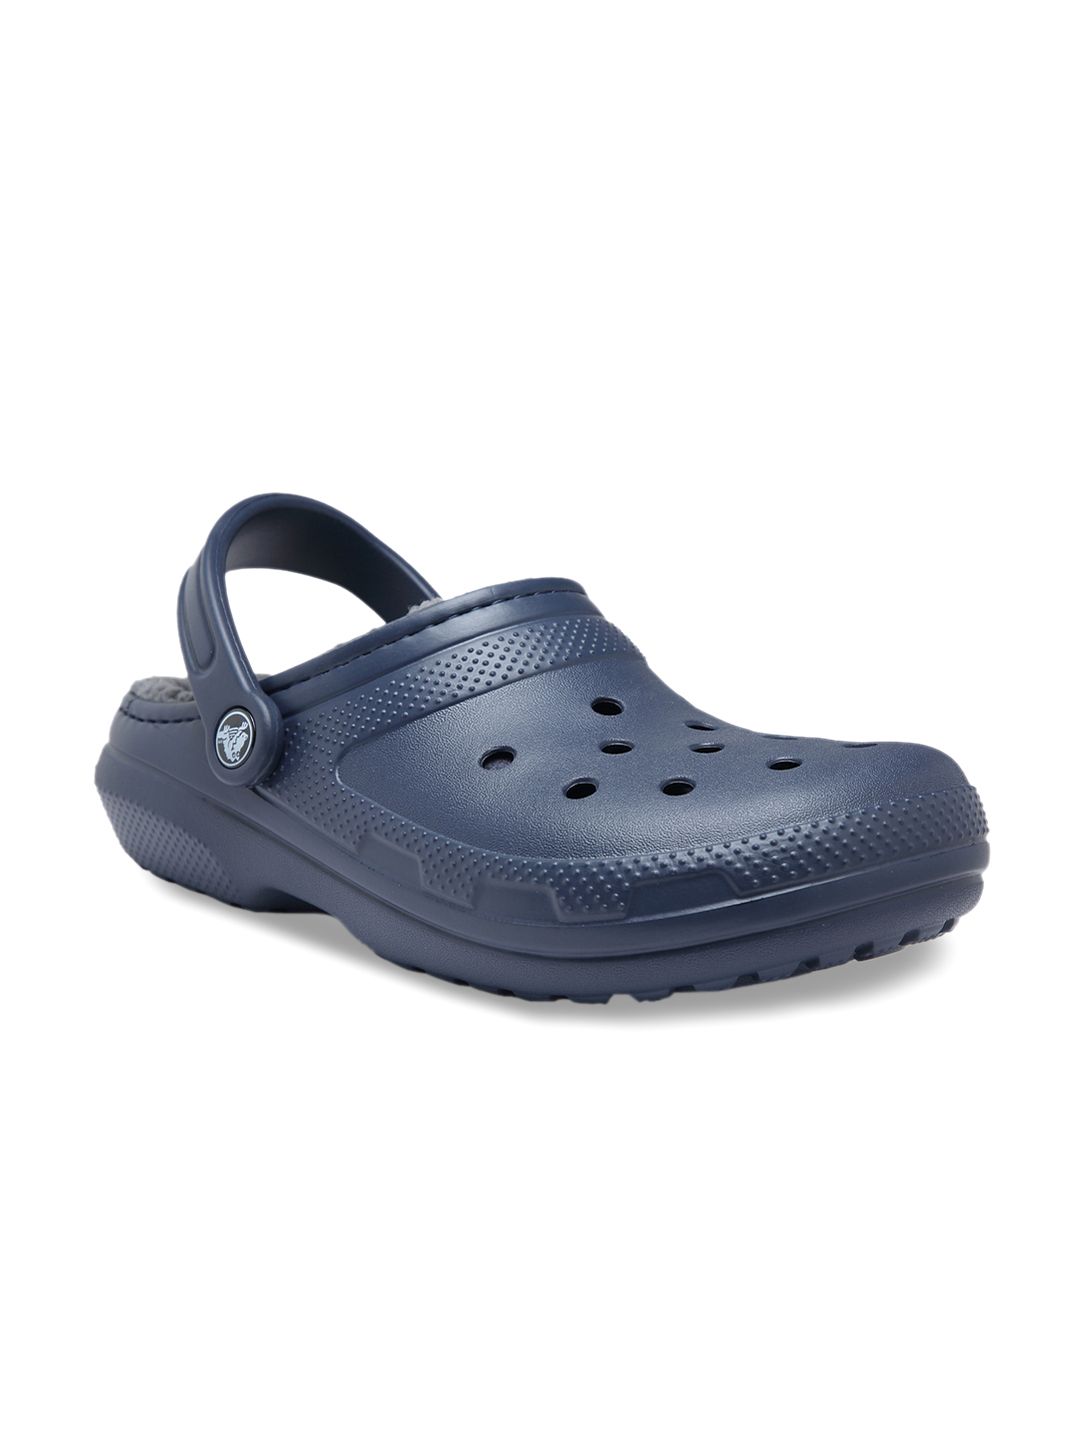 Crocs Literide Navy Blue Clogs Sandals for Men online in India at Best ...